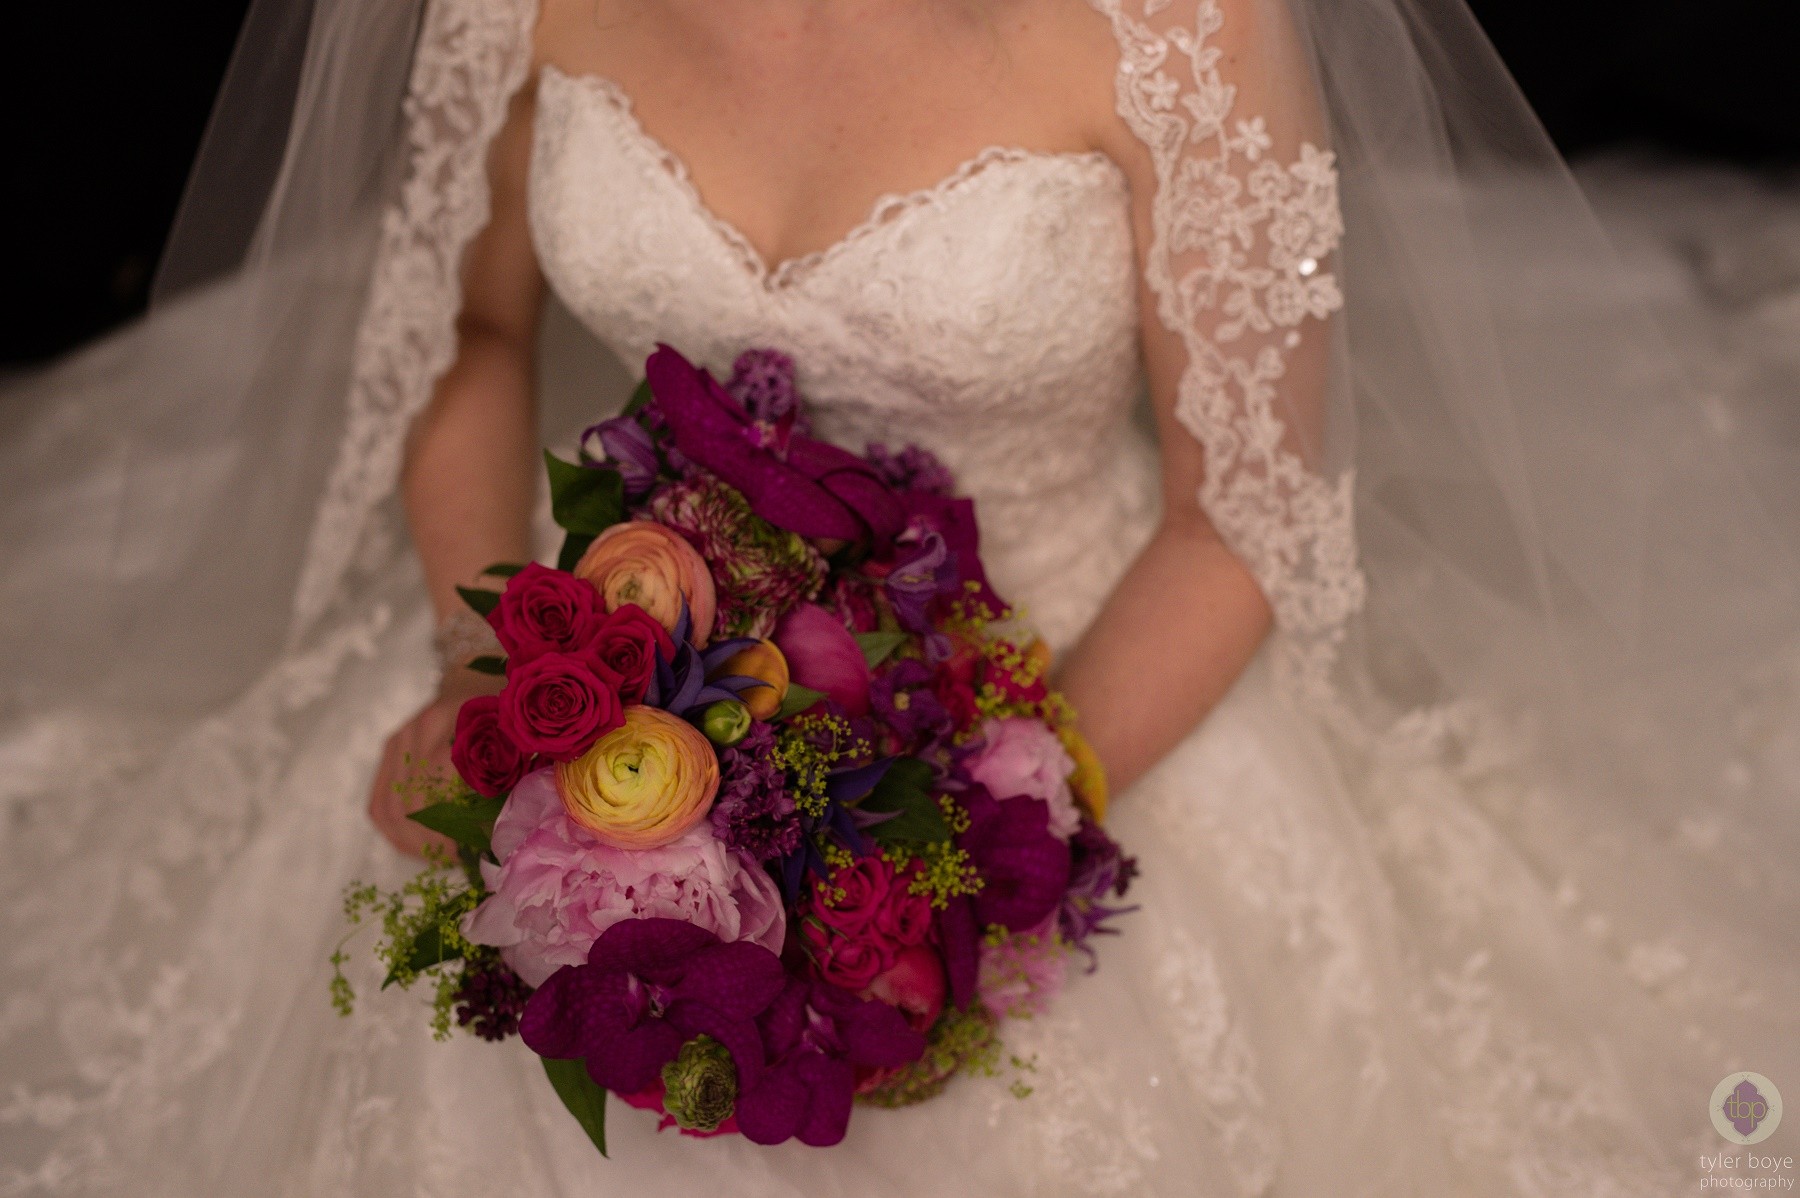 Colorful Bridal Bouquet Evantine Design Philadelphia Florist Tyler Boye Photographer